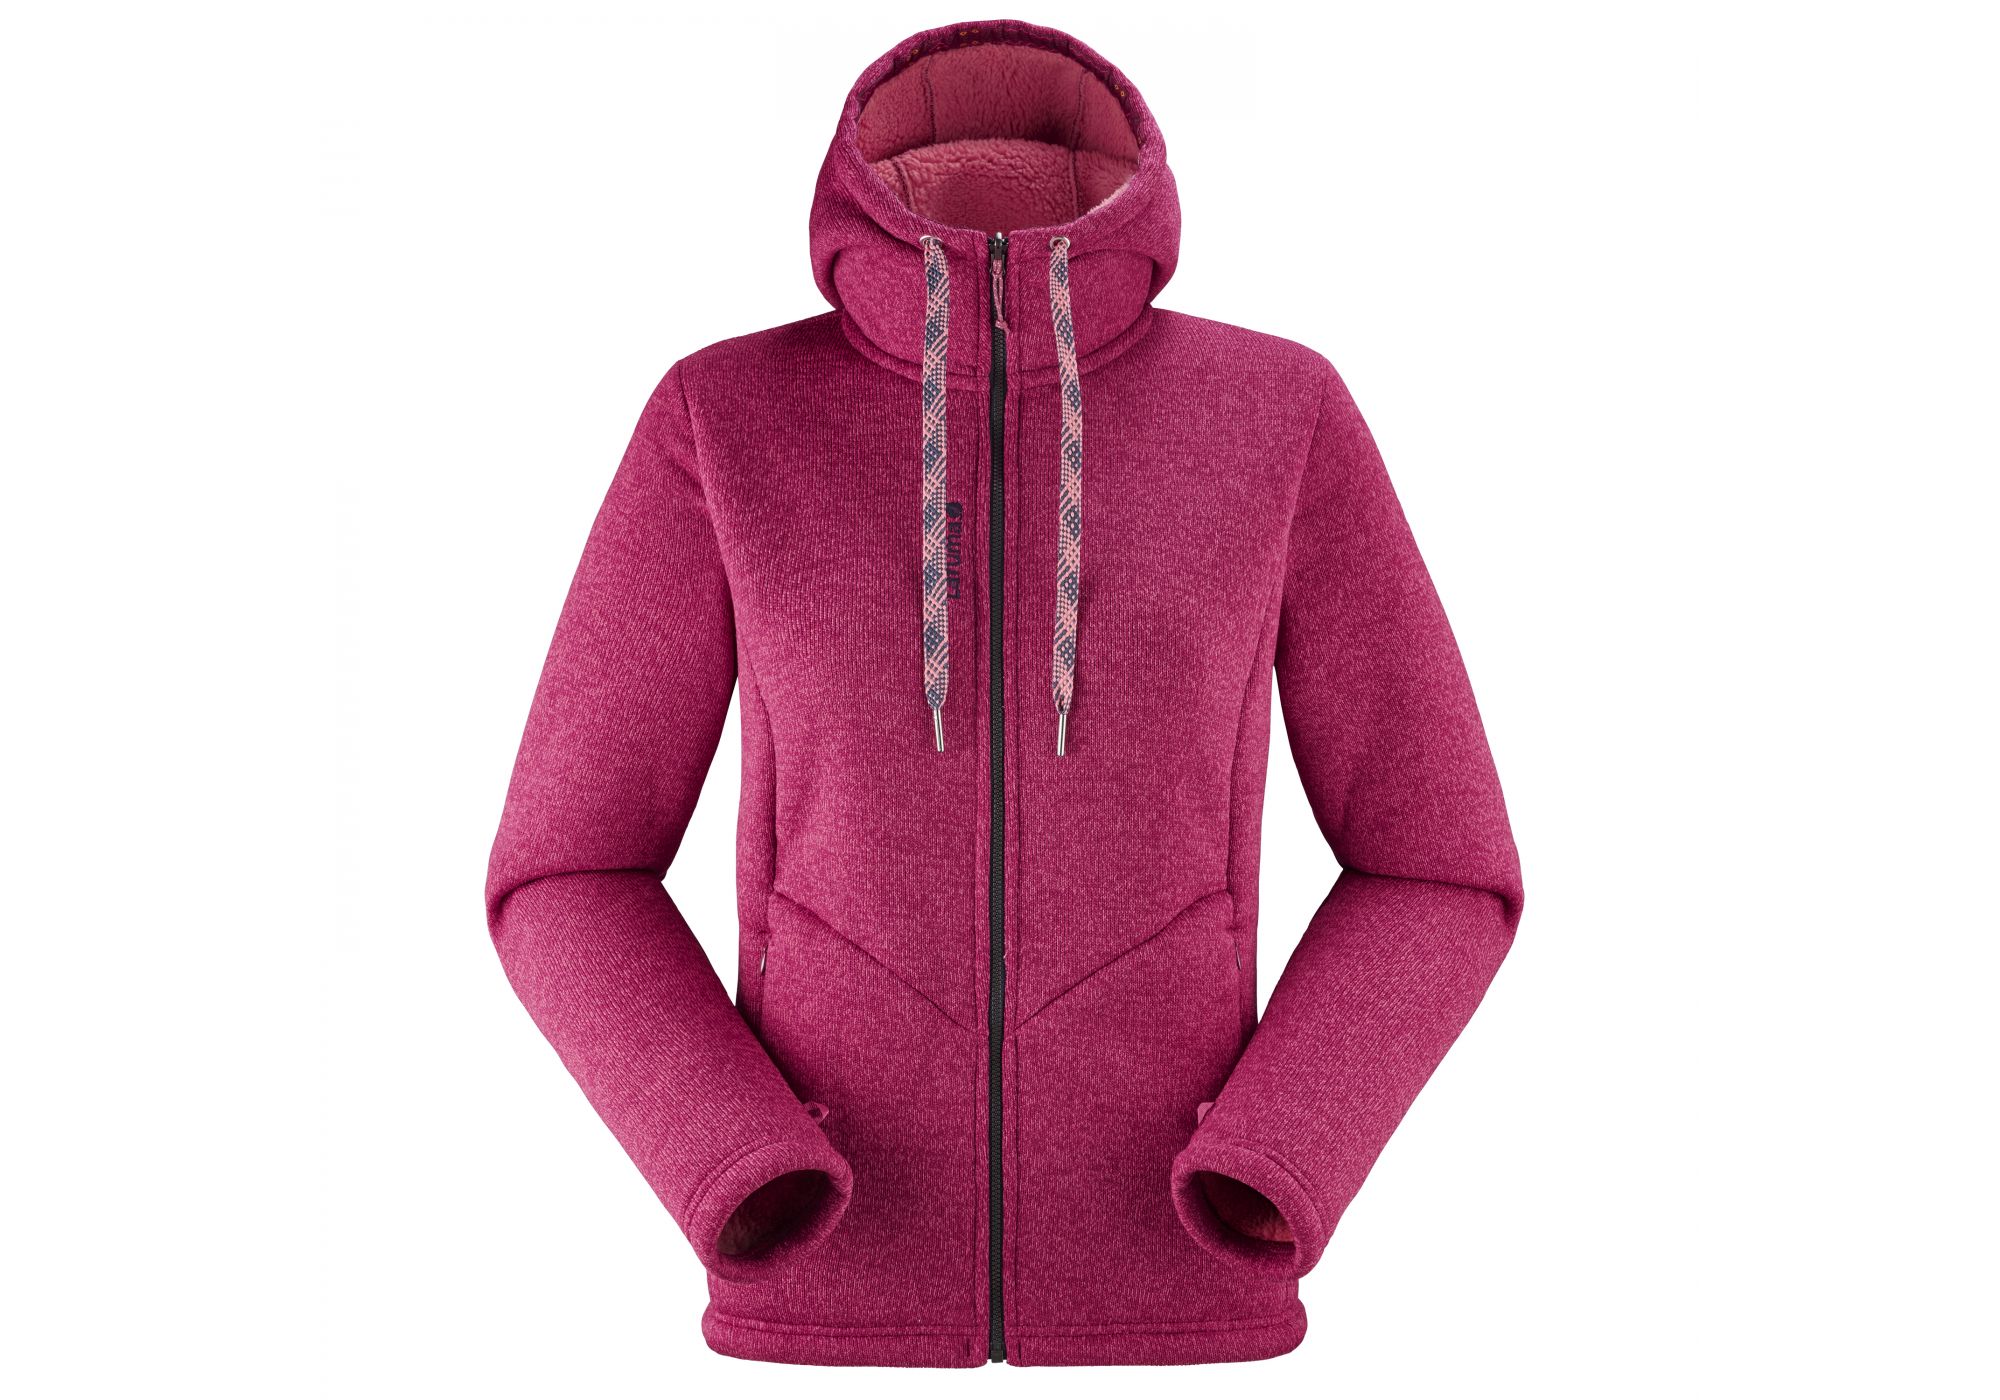 Lafuma Cali Hoodie - Fleece jacket Women's, Buy online